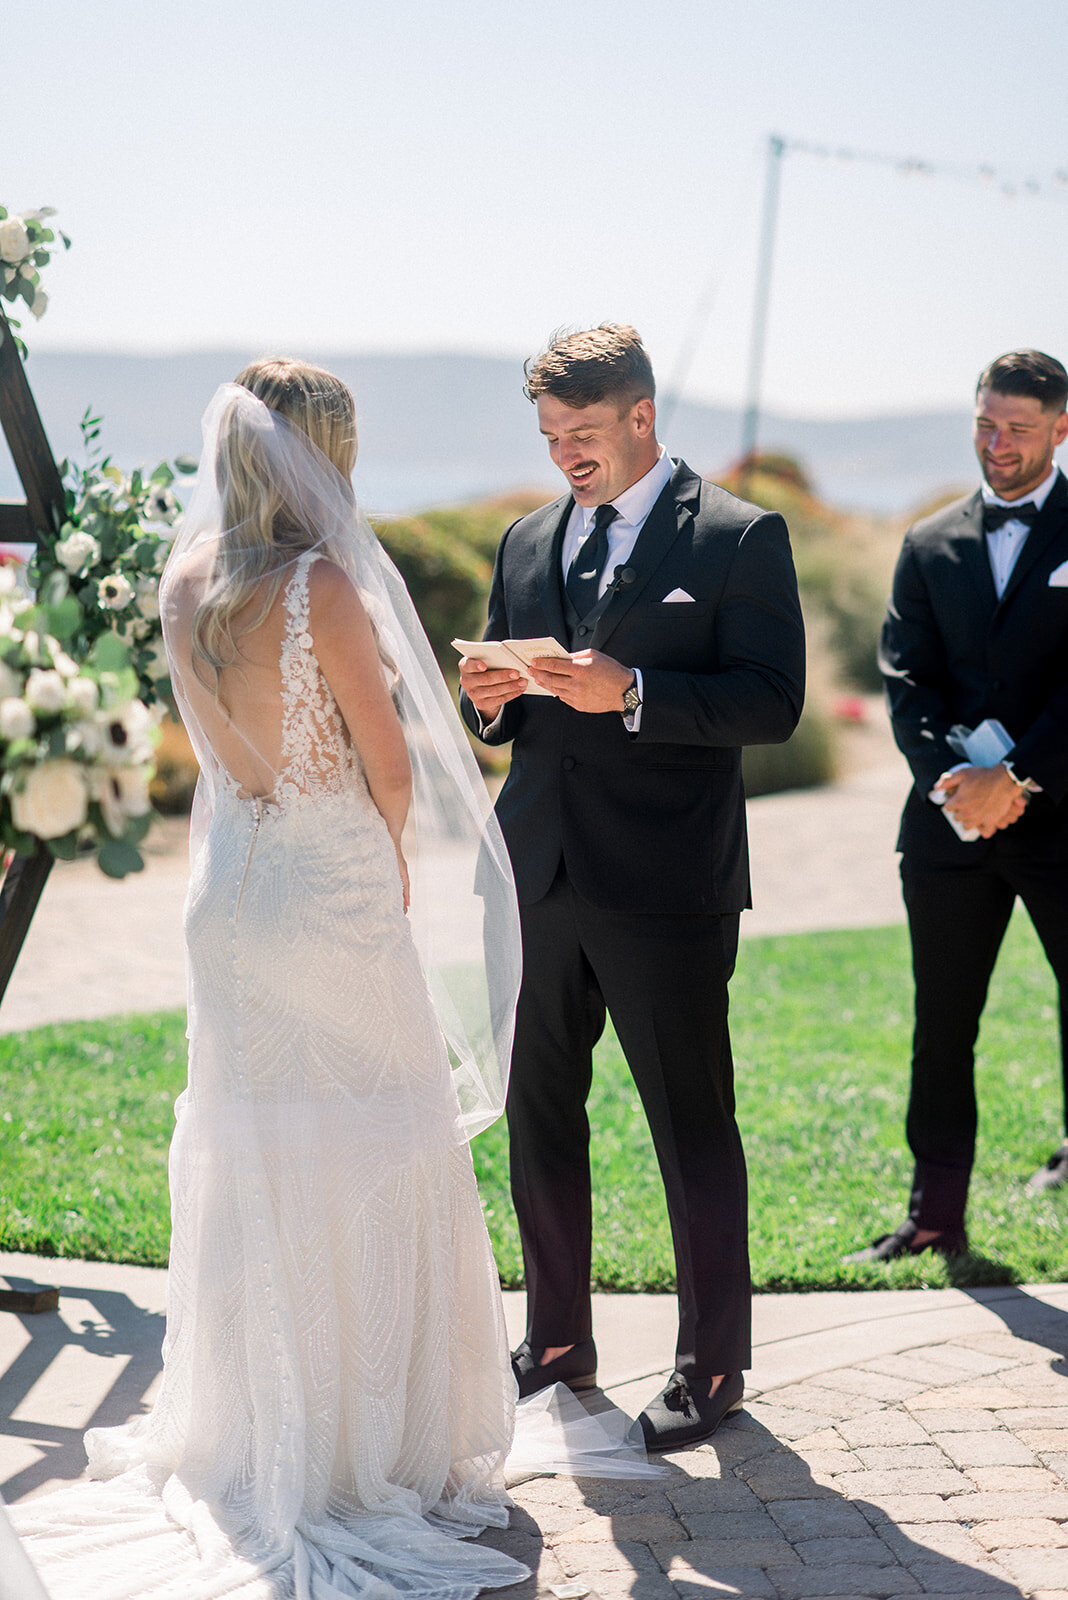 wedding ceremony at Dolphin Bay Resort in Pismo Beach, CA